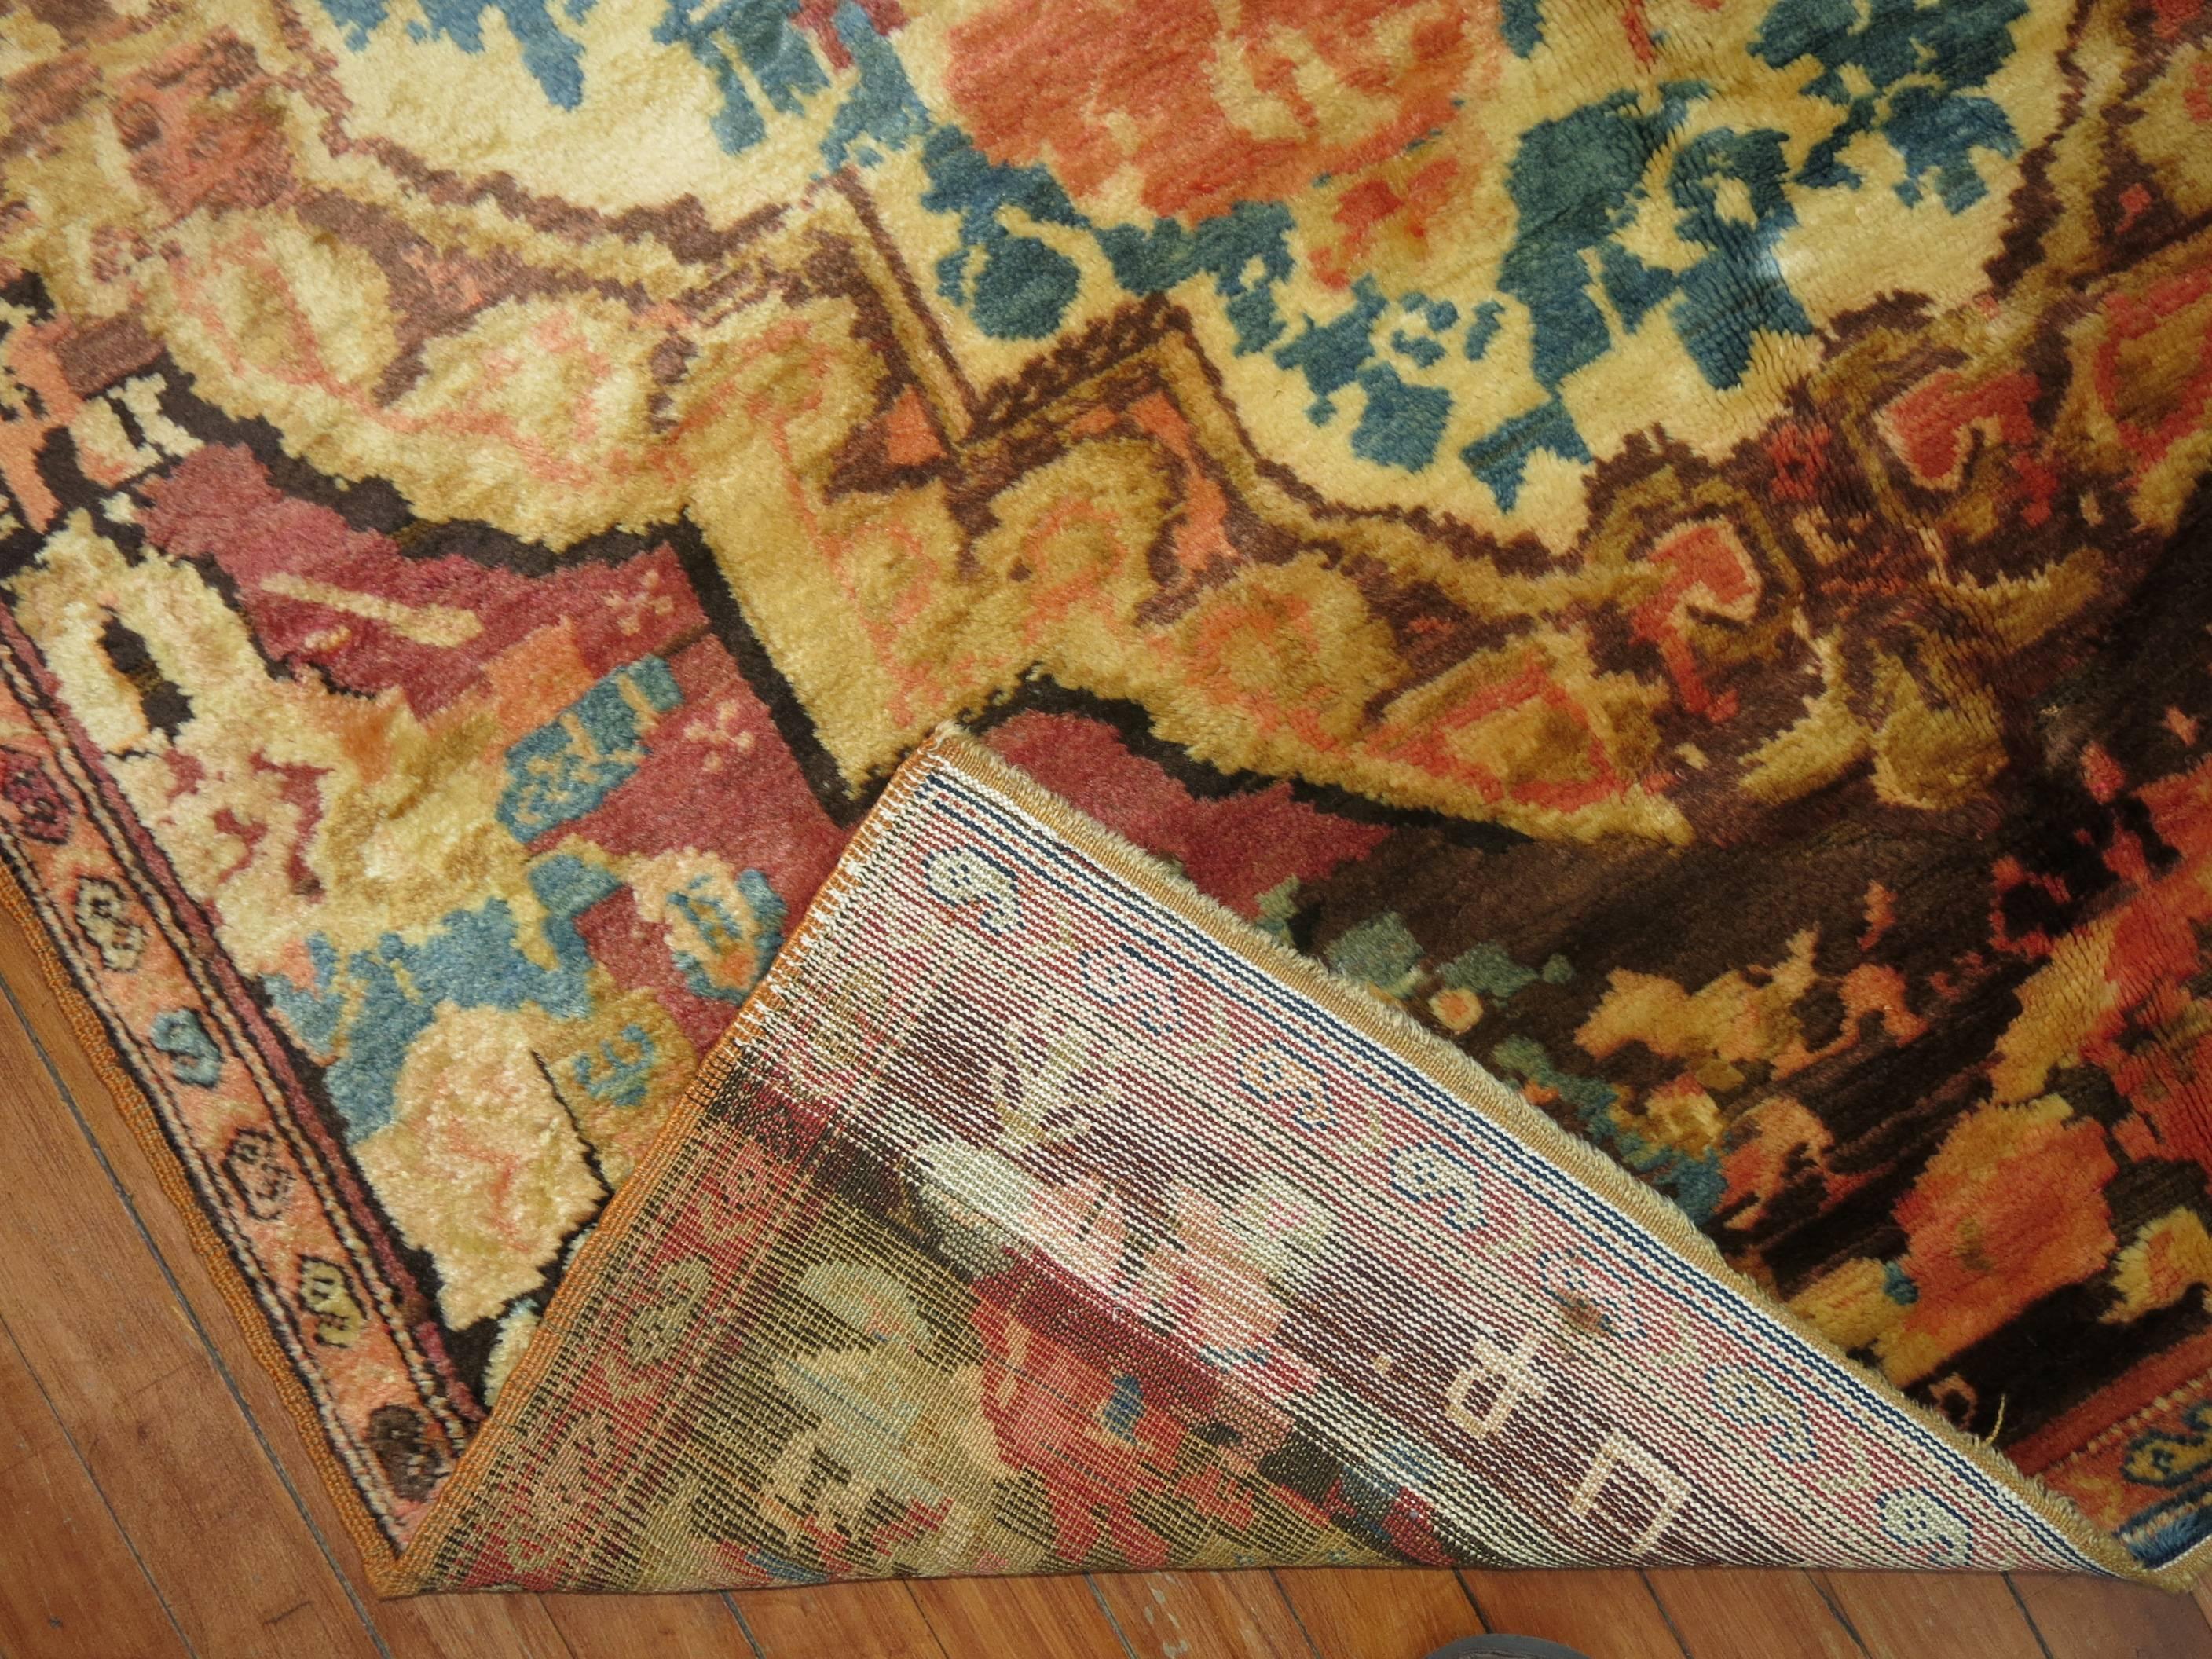 Muave Brauner handgewebter antiker armenischer geblümter Karabagh-Teppich, datiert 1934 (Armenisch) im Angebot